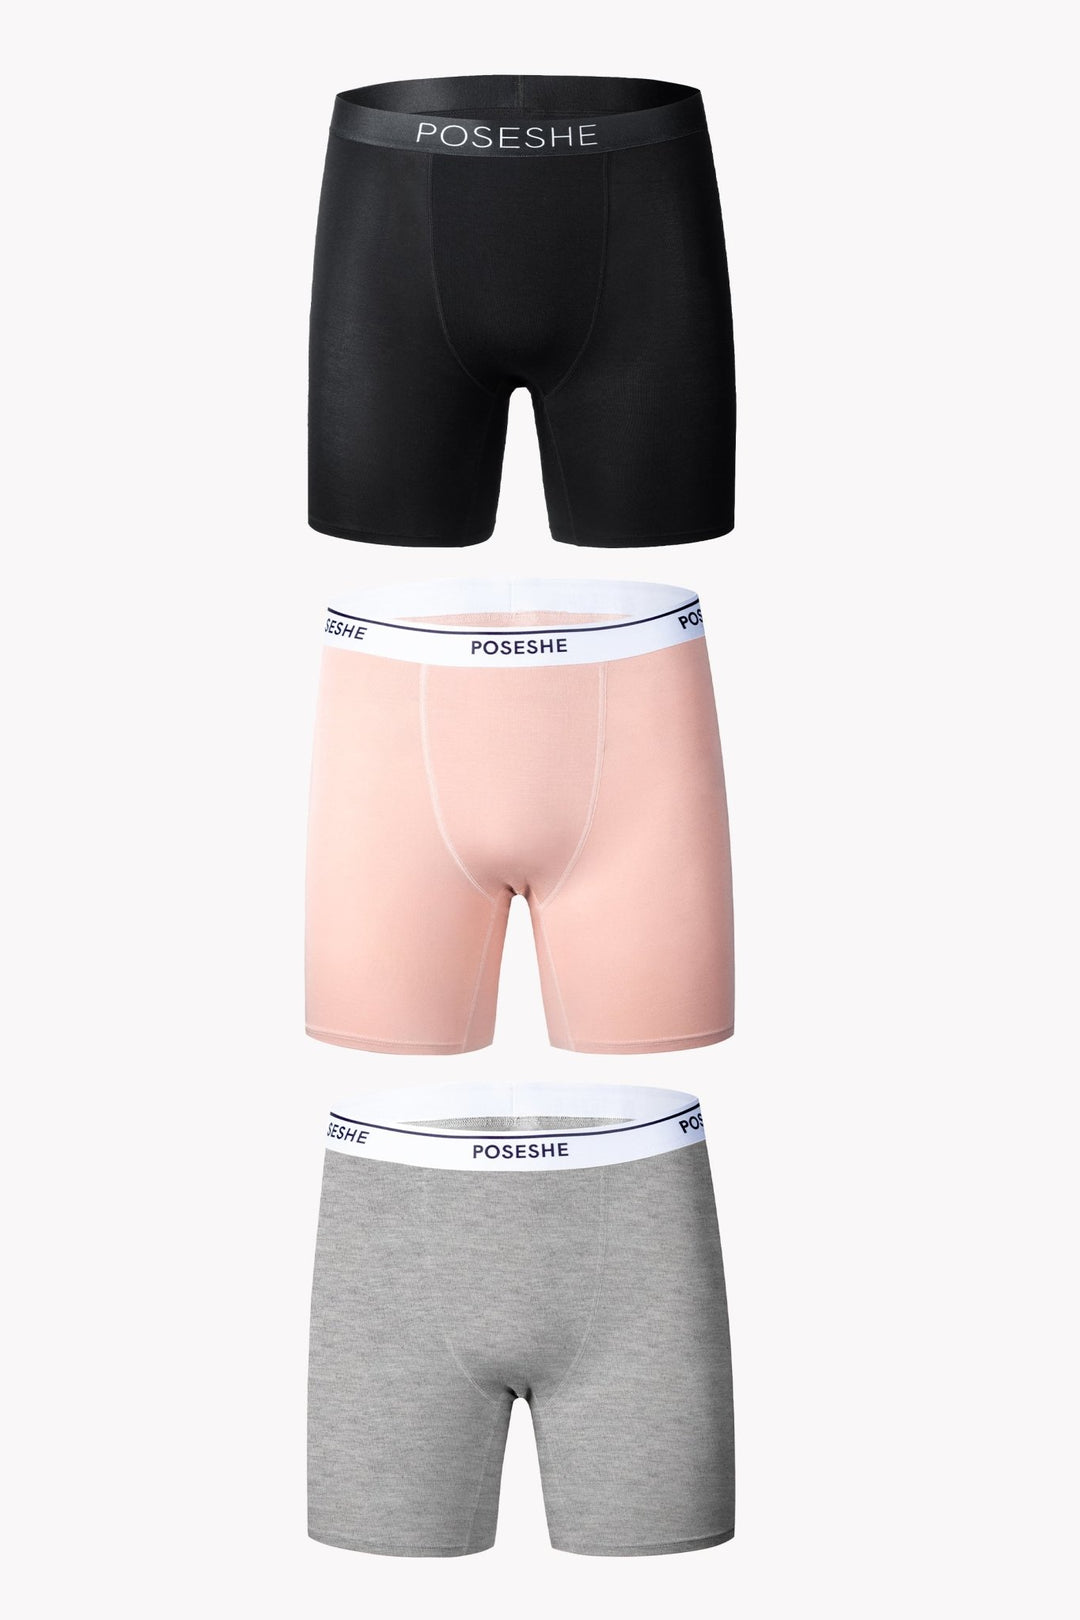 Calvin Klein Body Cotton 3 pack high waist thong